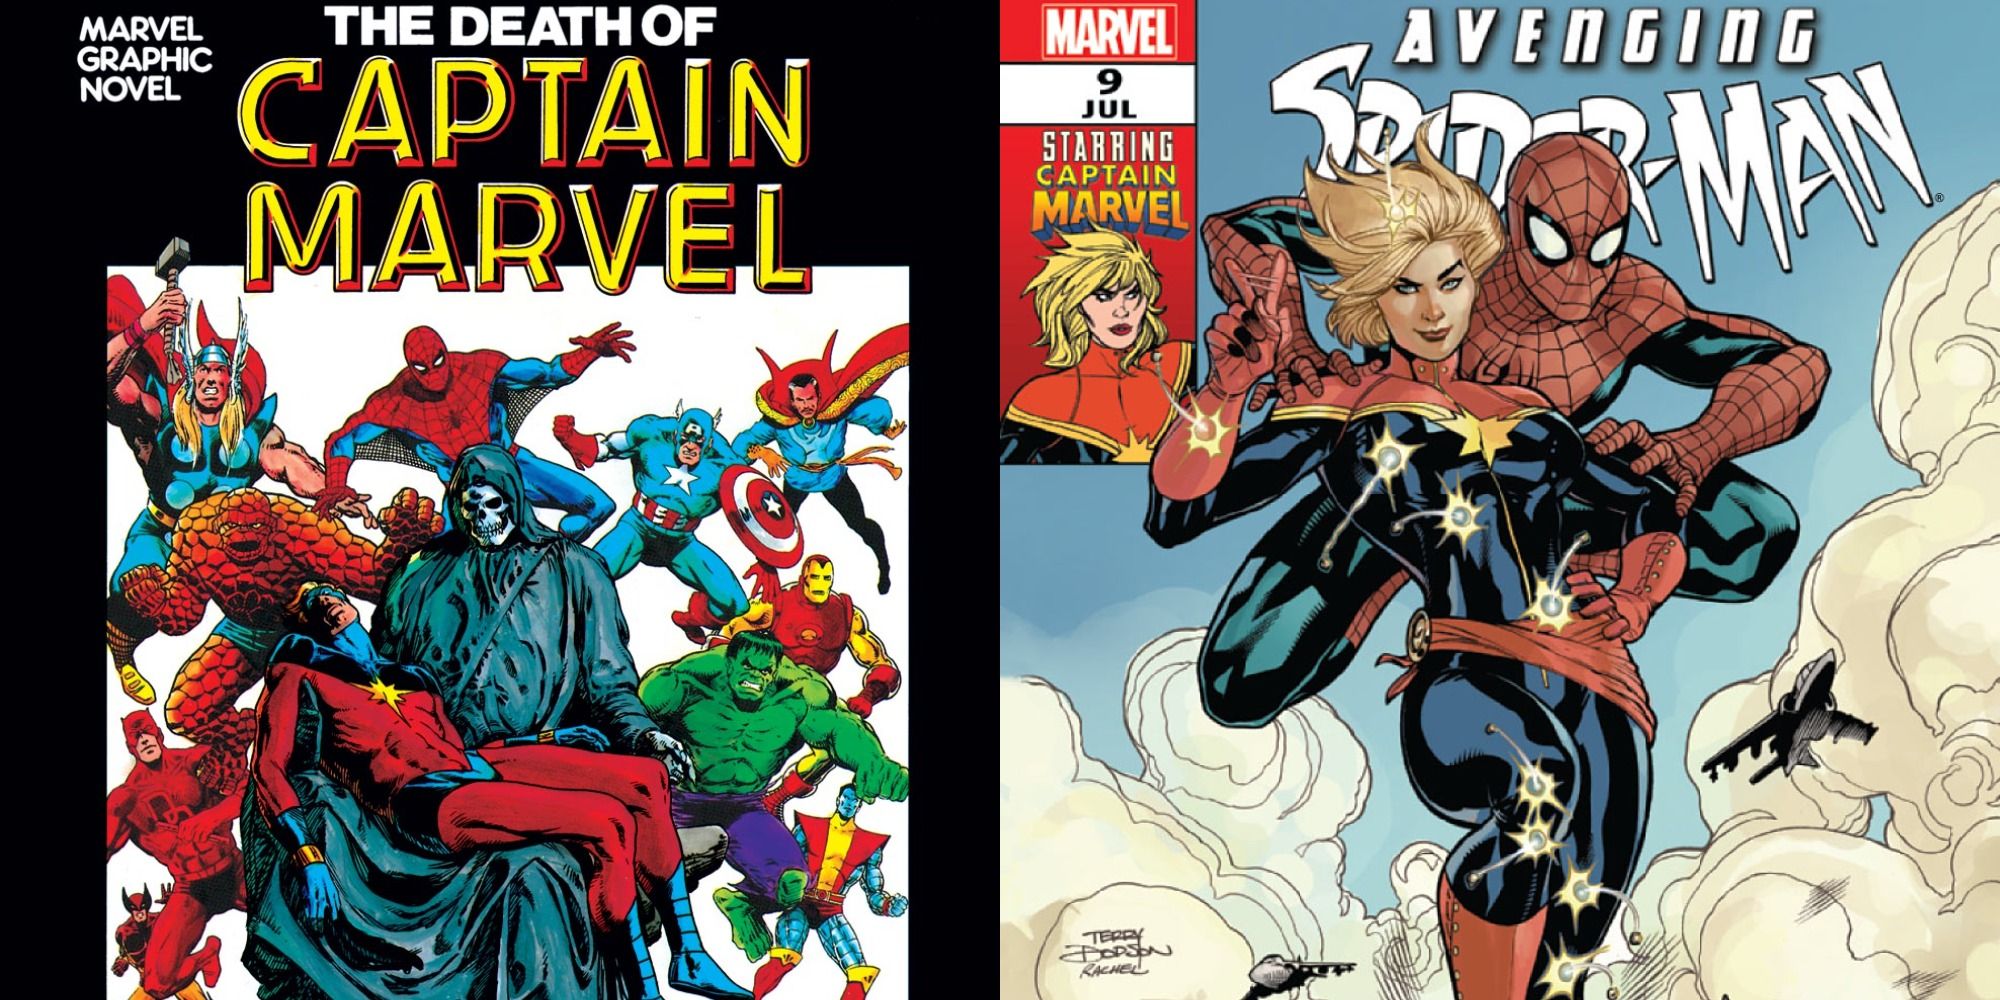 Marvel's Captain Marvel Comics, Graphic Novels, & Manga eBook by